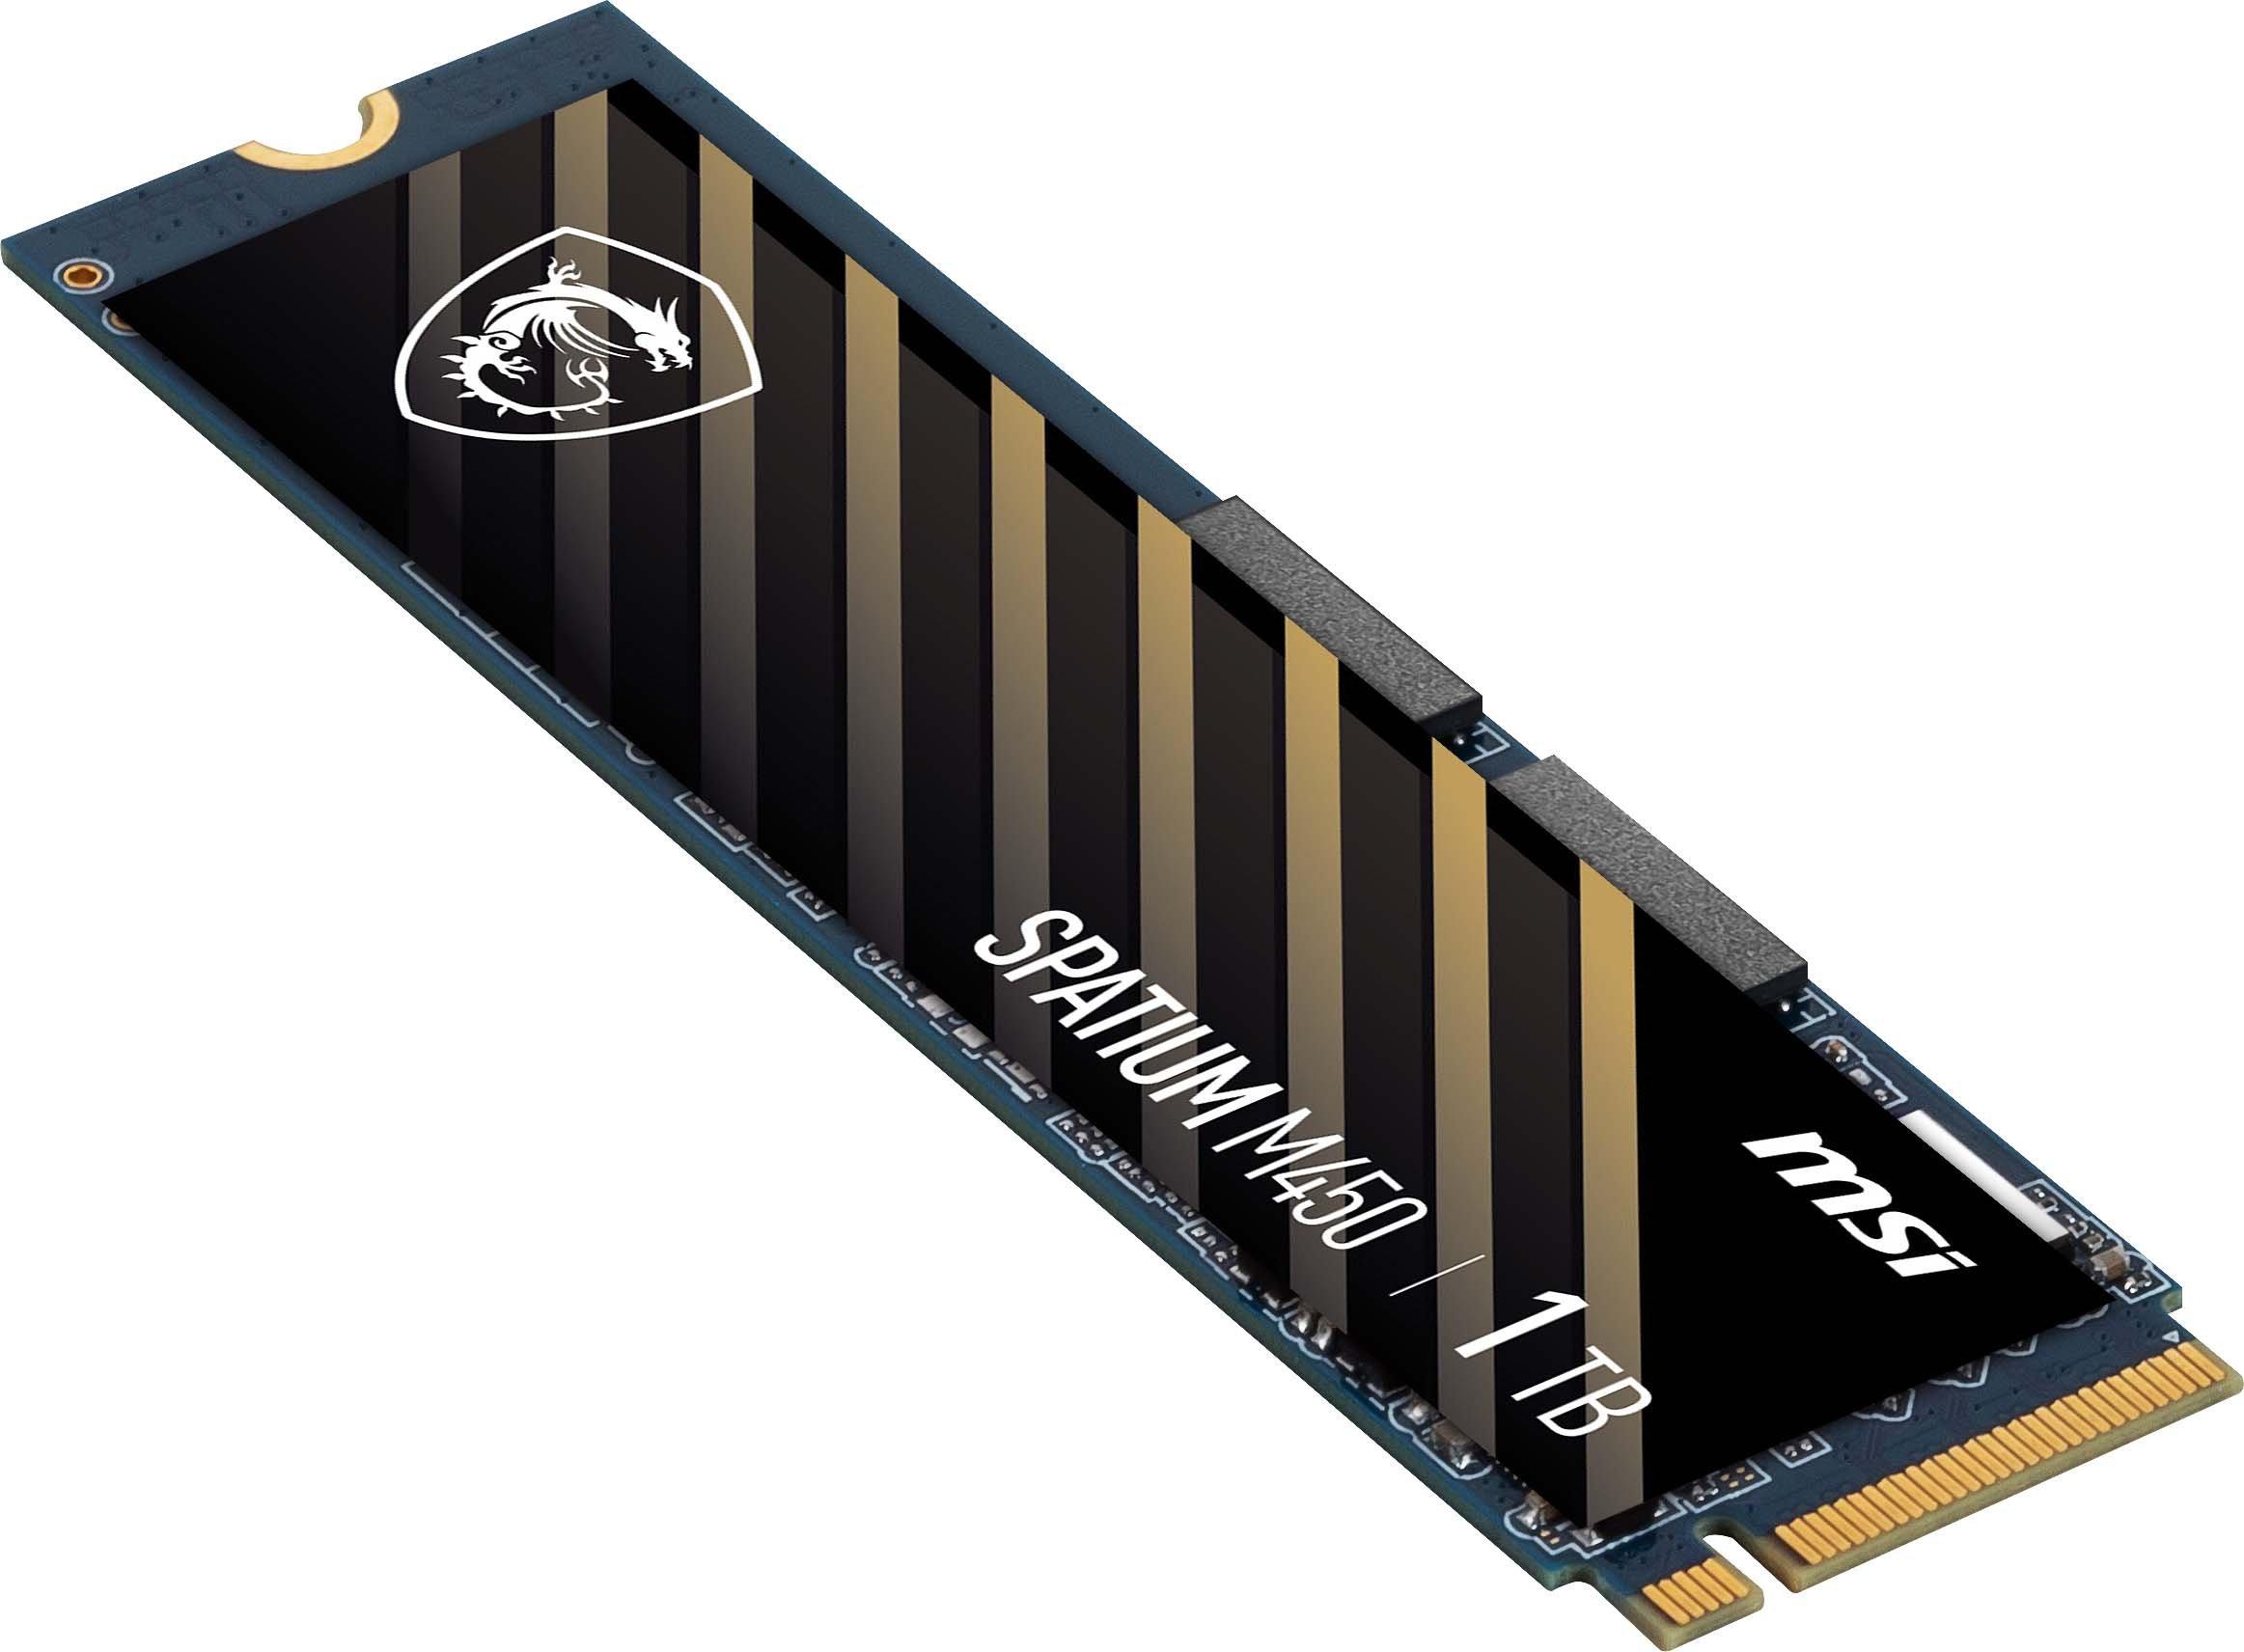 MSI SPATIUM M450 PCIe 4.0 NVMe M.2 1TB SSD Storage - MSI-US Official Store